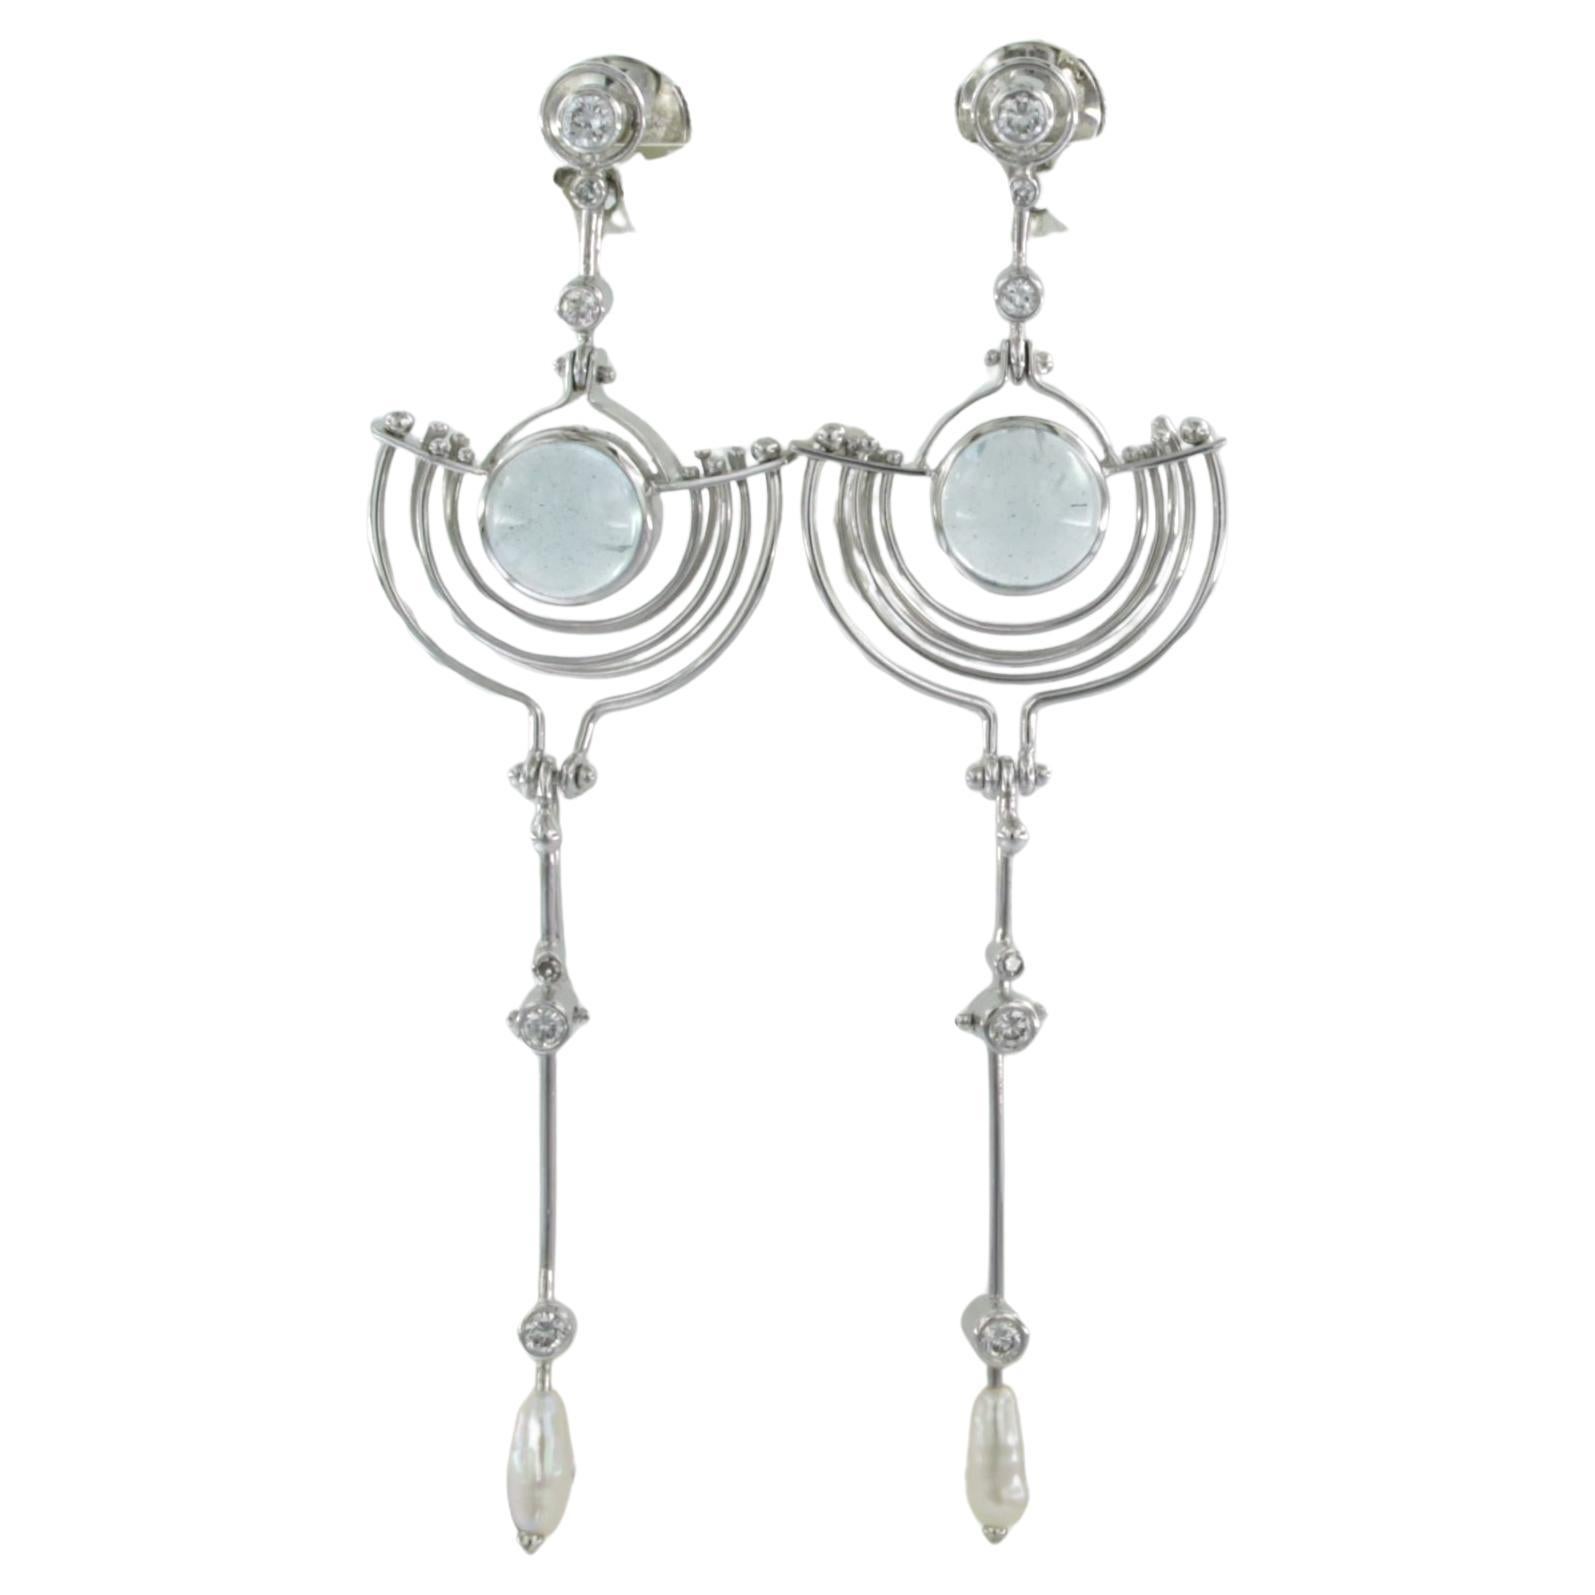 18k white gold earrings set with pearl, aquamarine and brilliant cut diamonds